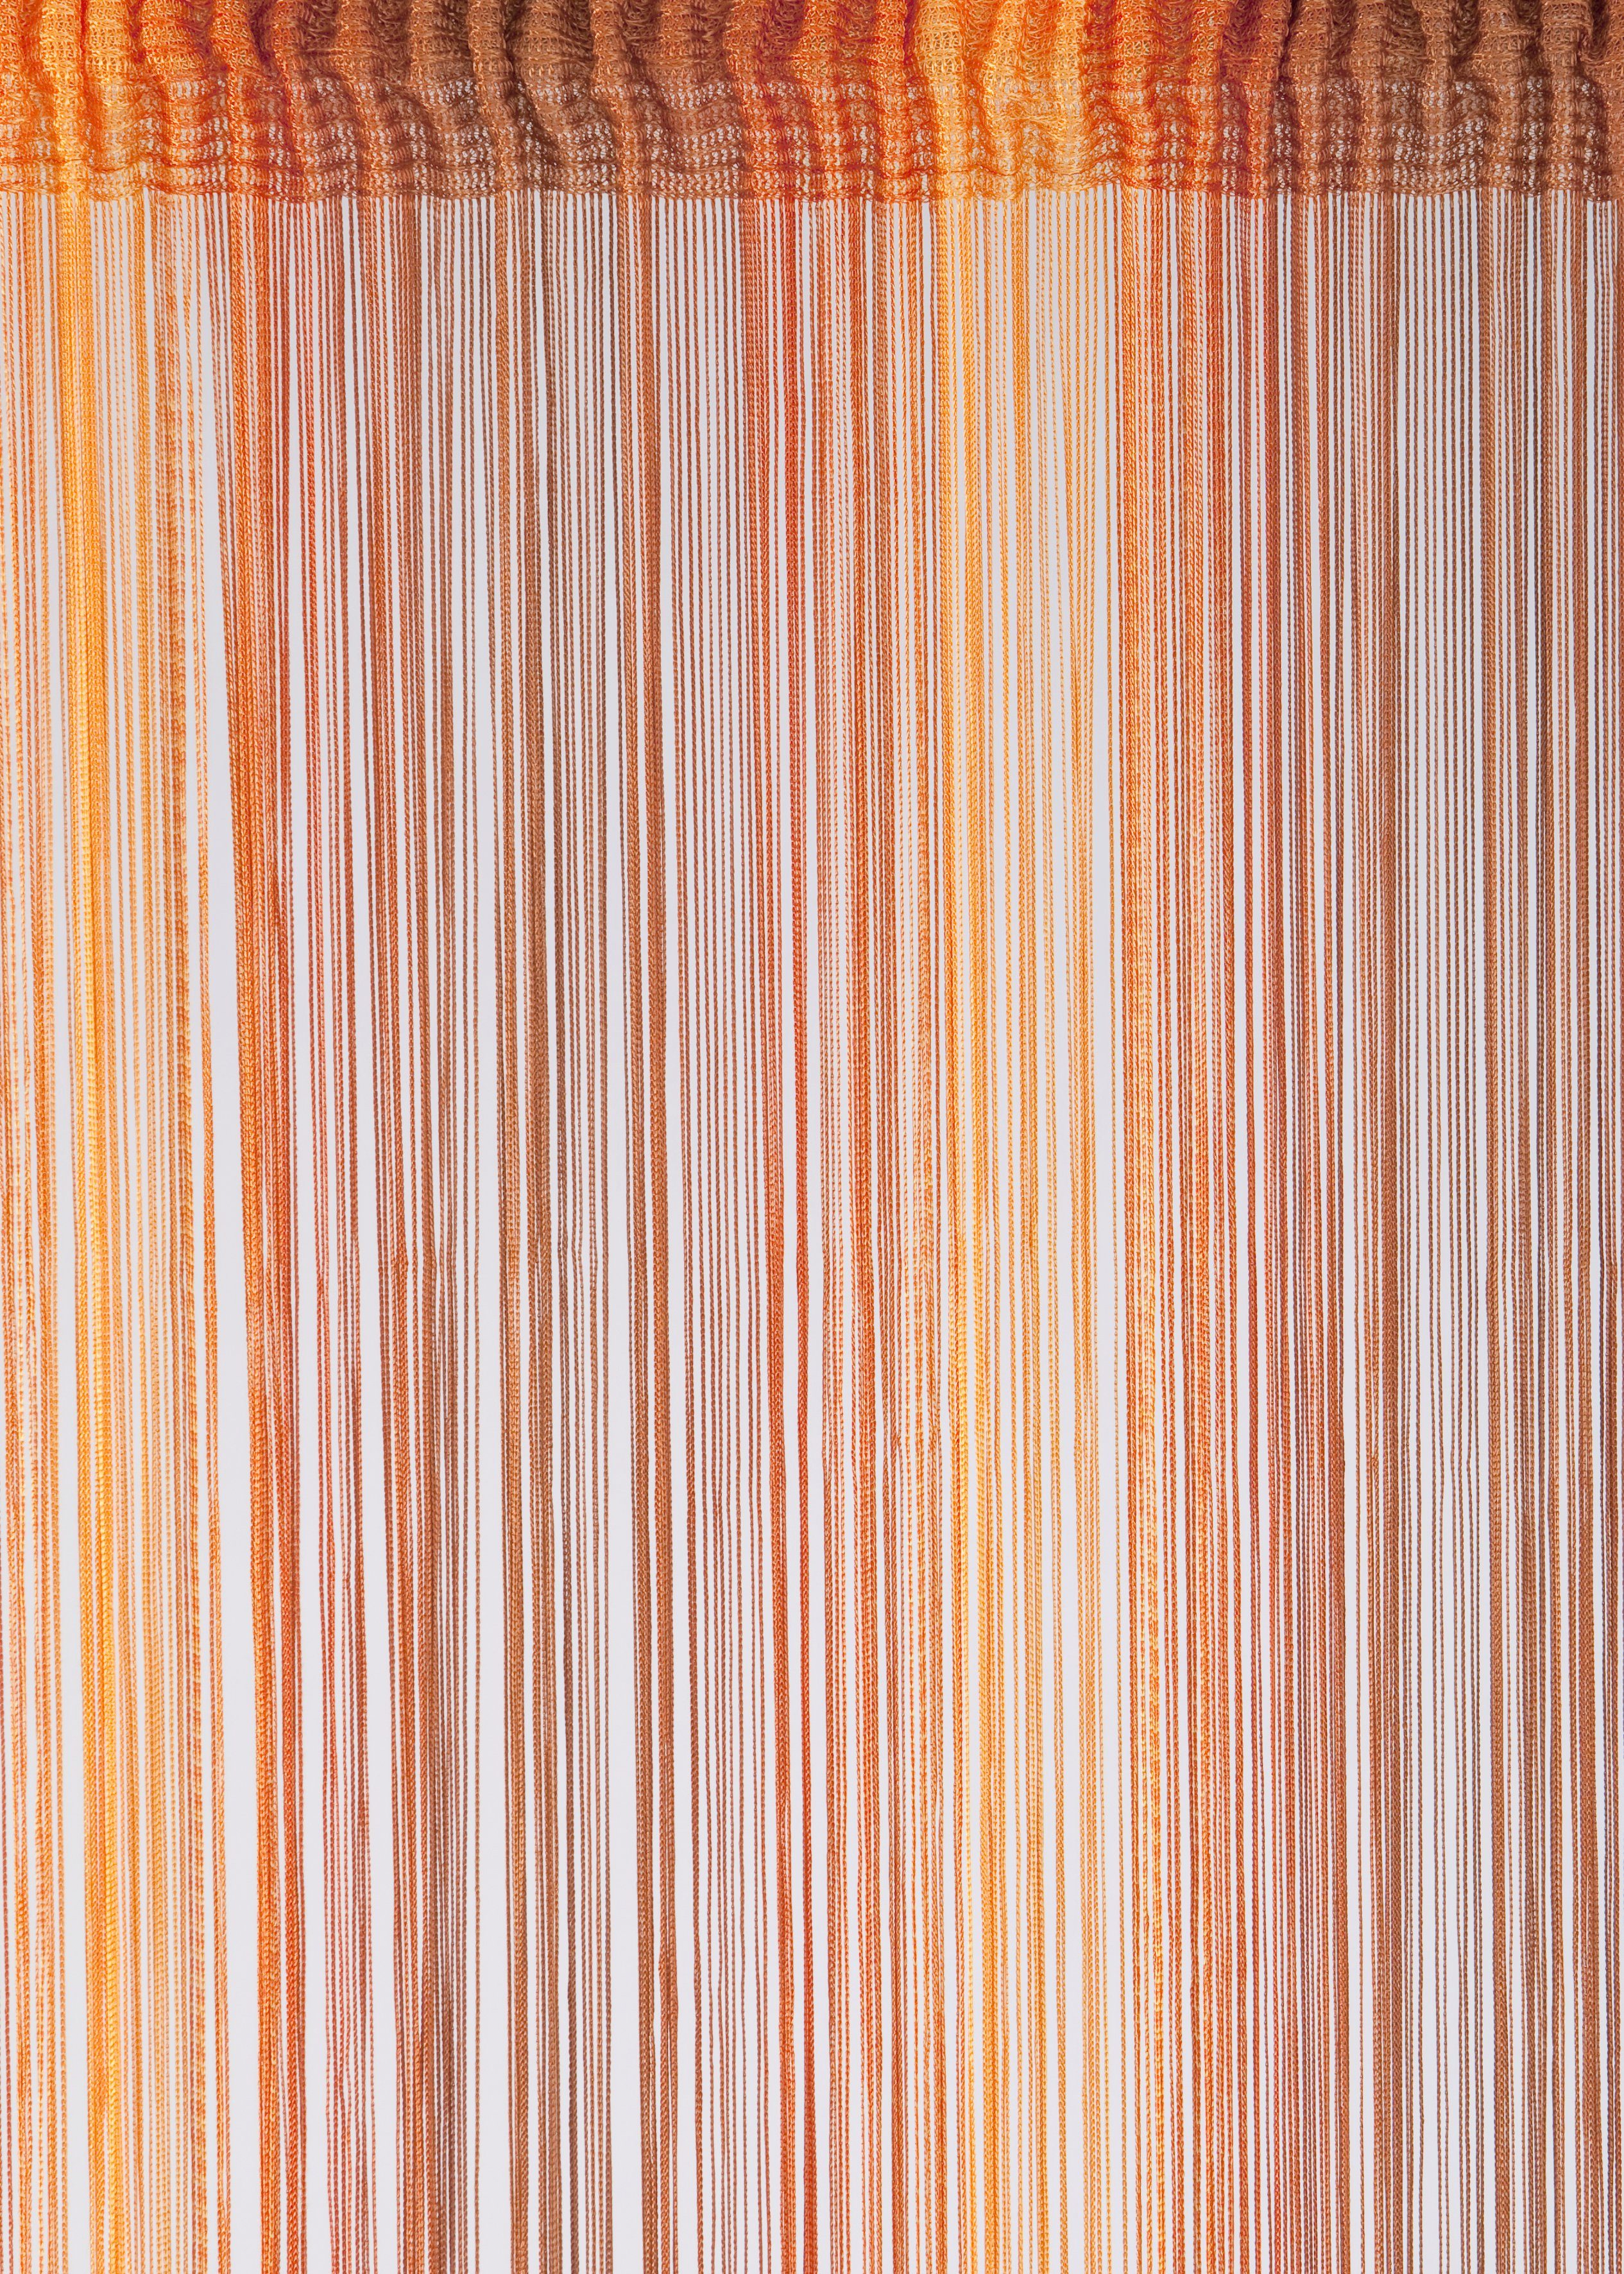 Fadenvorhang Rebecca, Weckbrodt, orange/terra (1 Insektenschutz, St), halbtransparent, Multifunktionsband Gardine, kürzbar transparent, Fadengardine